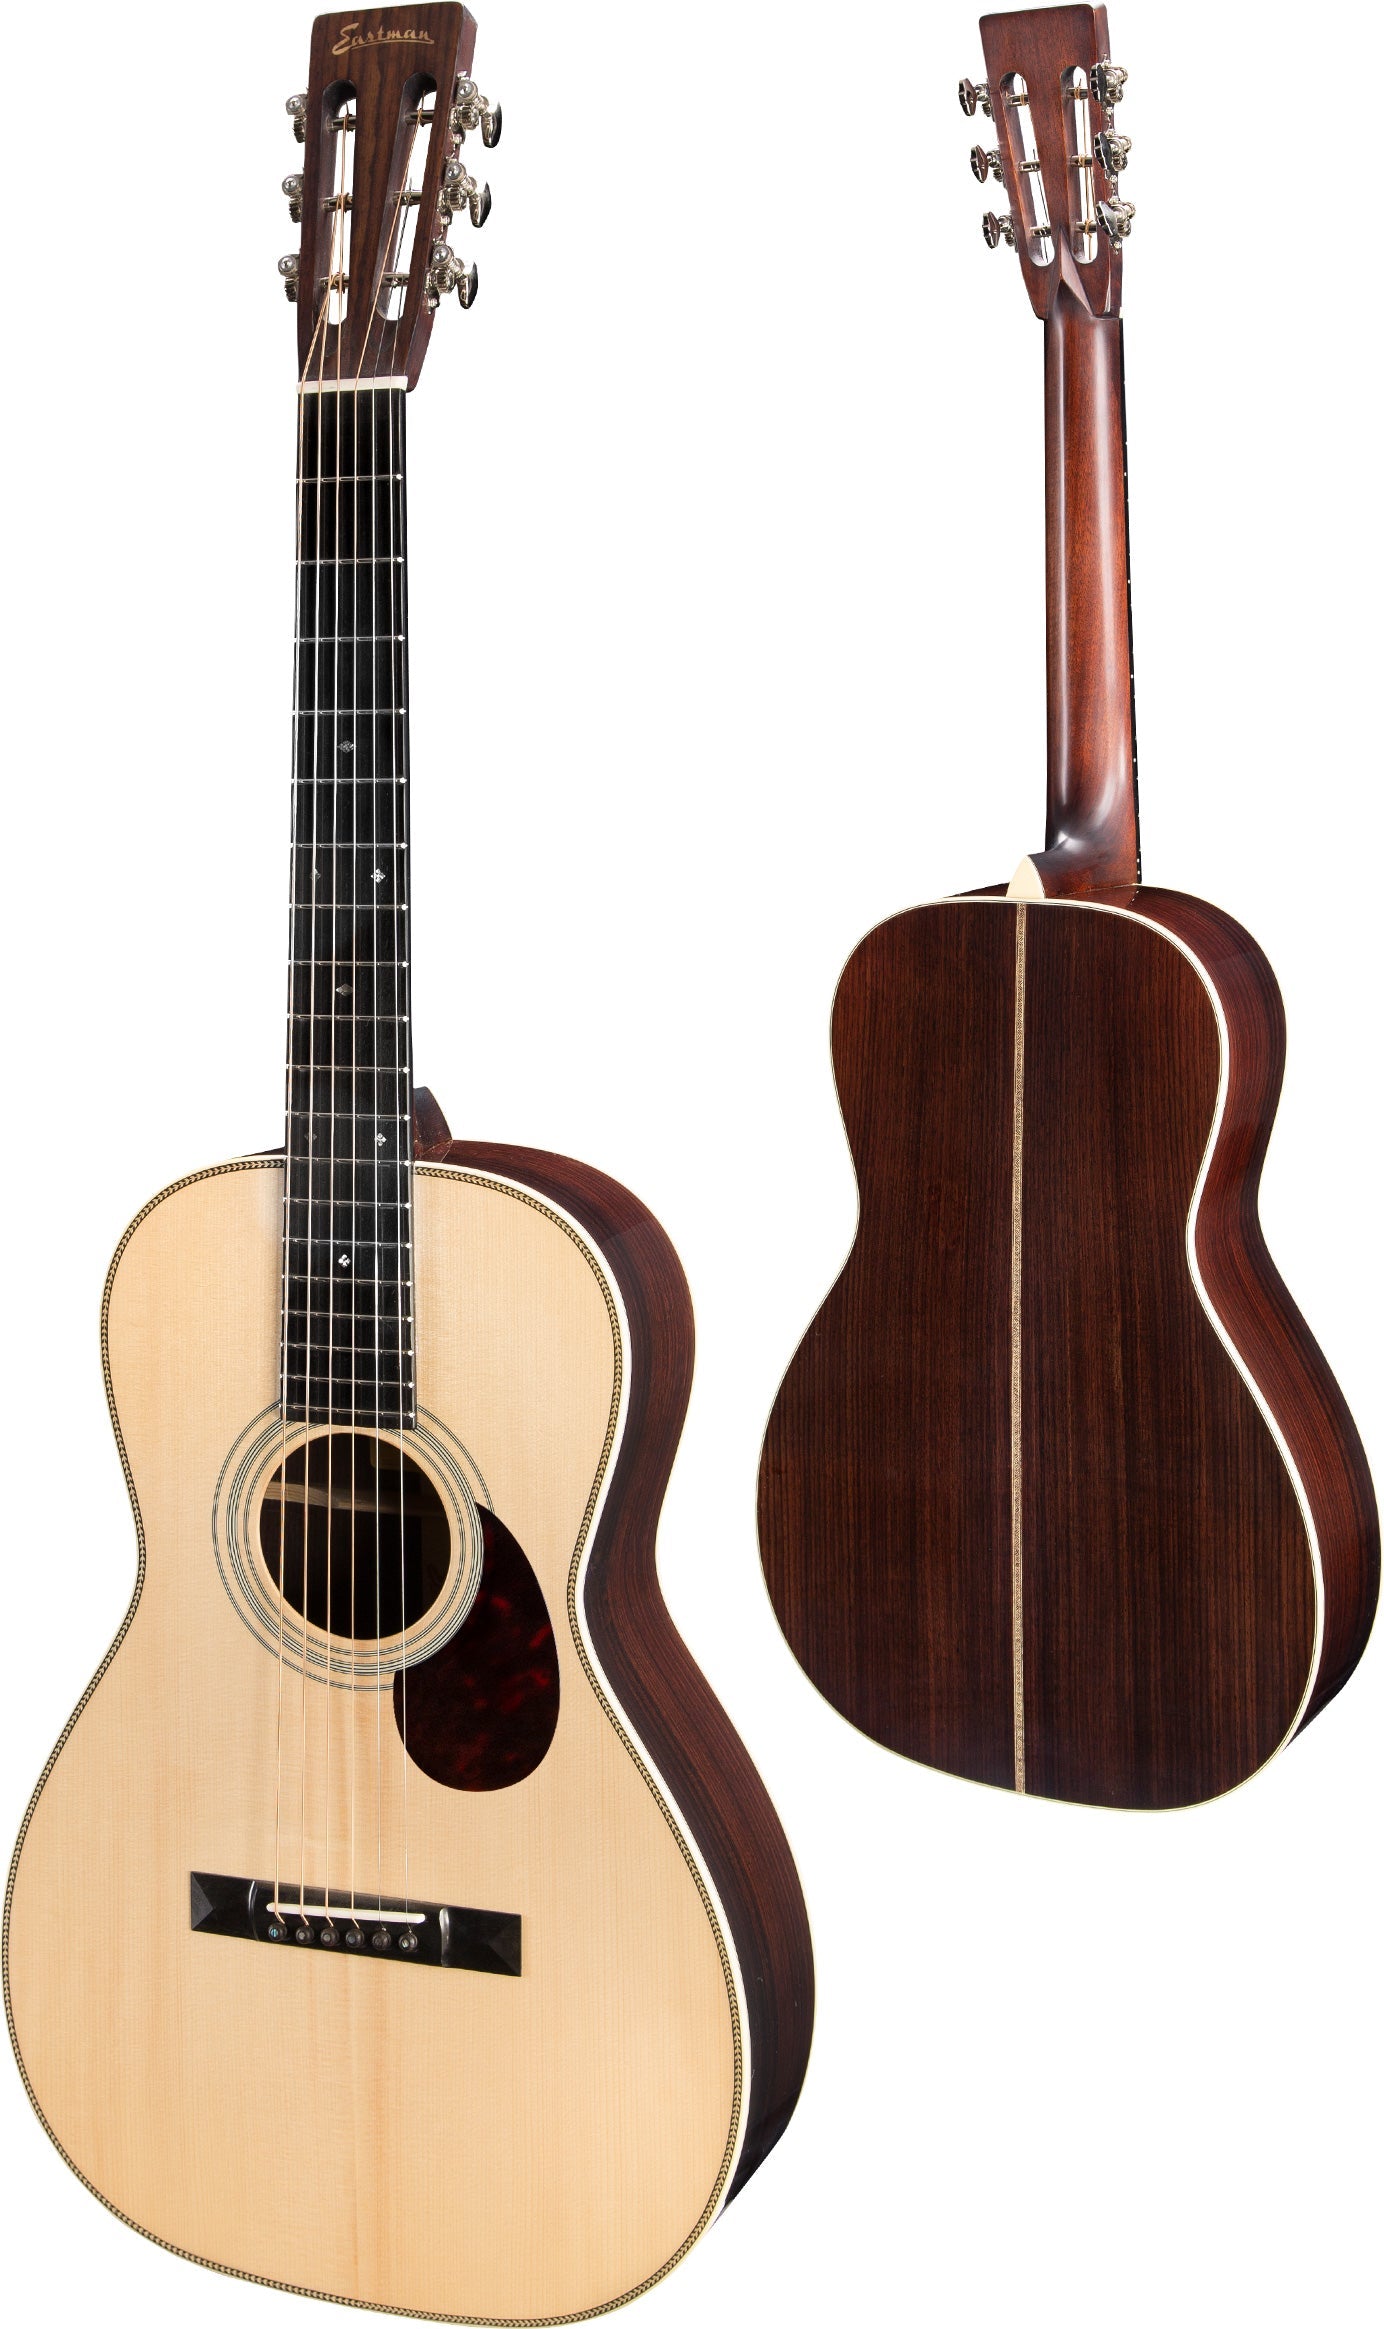 Eastman E20P, Acoustic Guitar for sale at Richards Guitars.